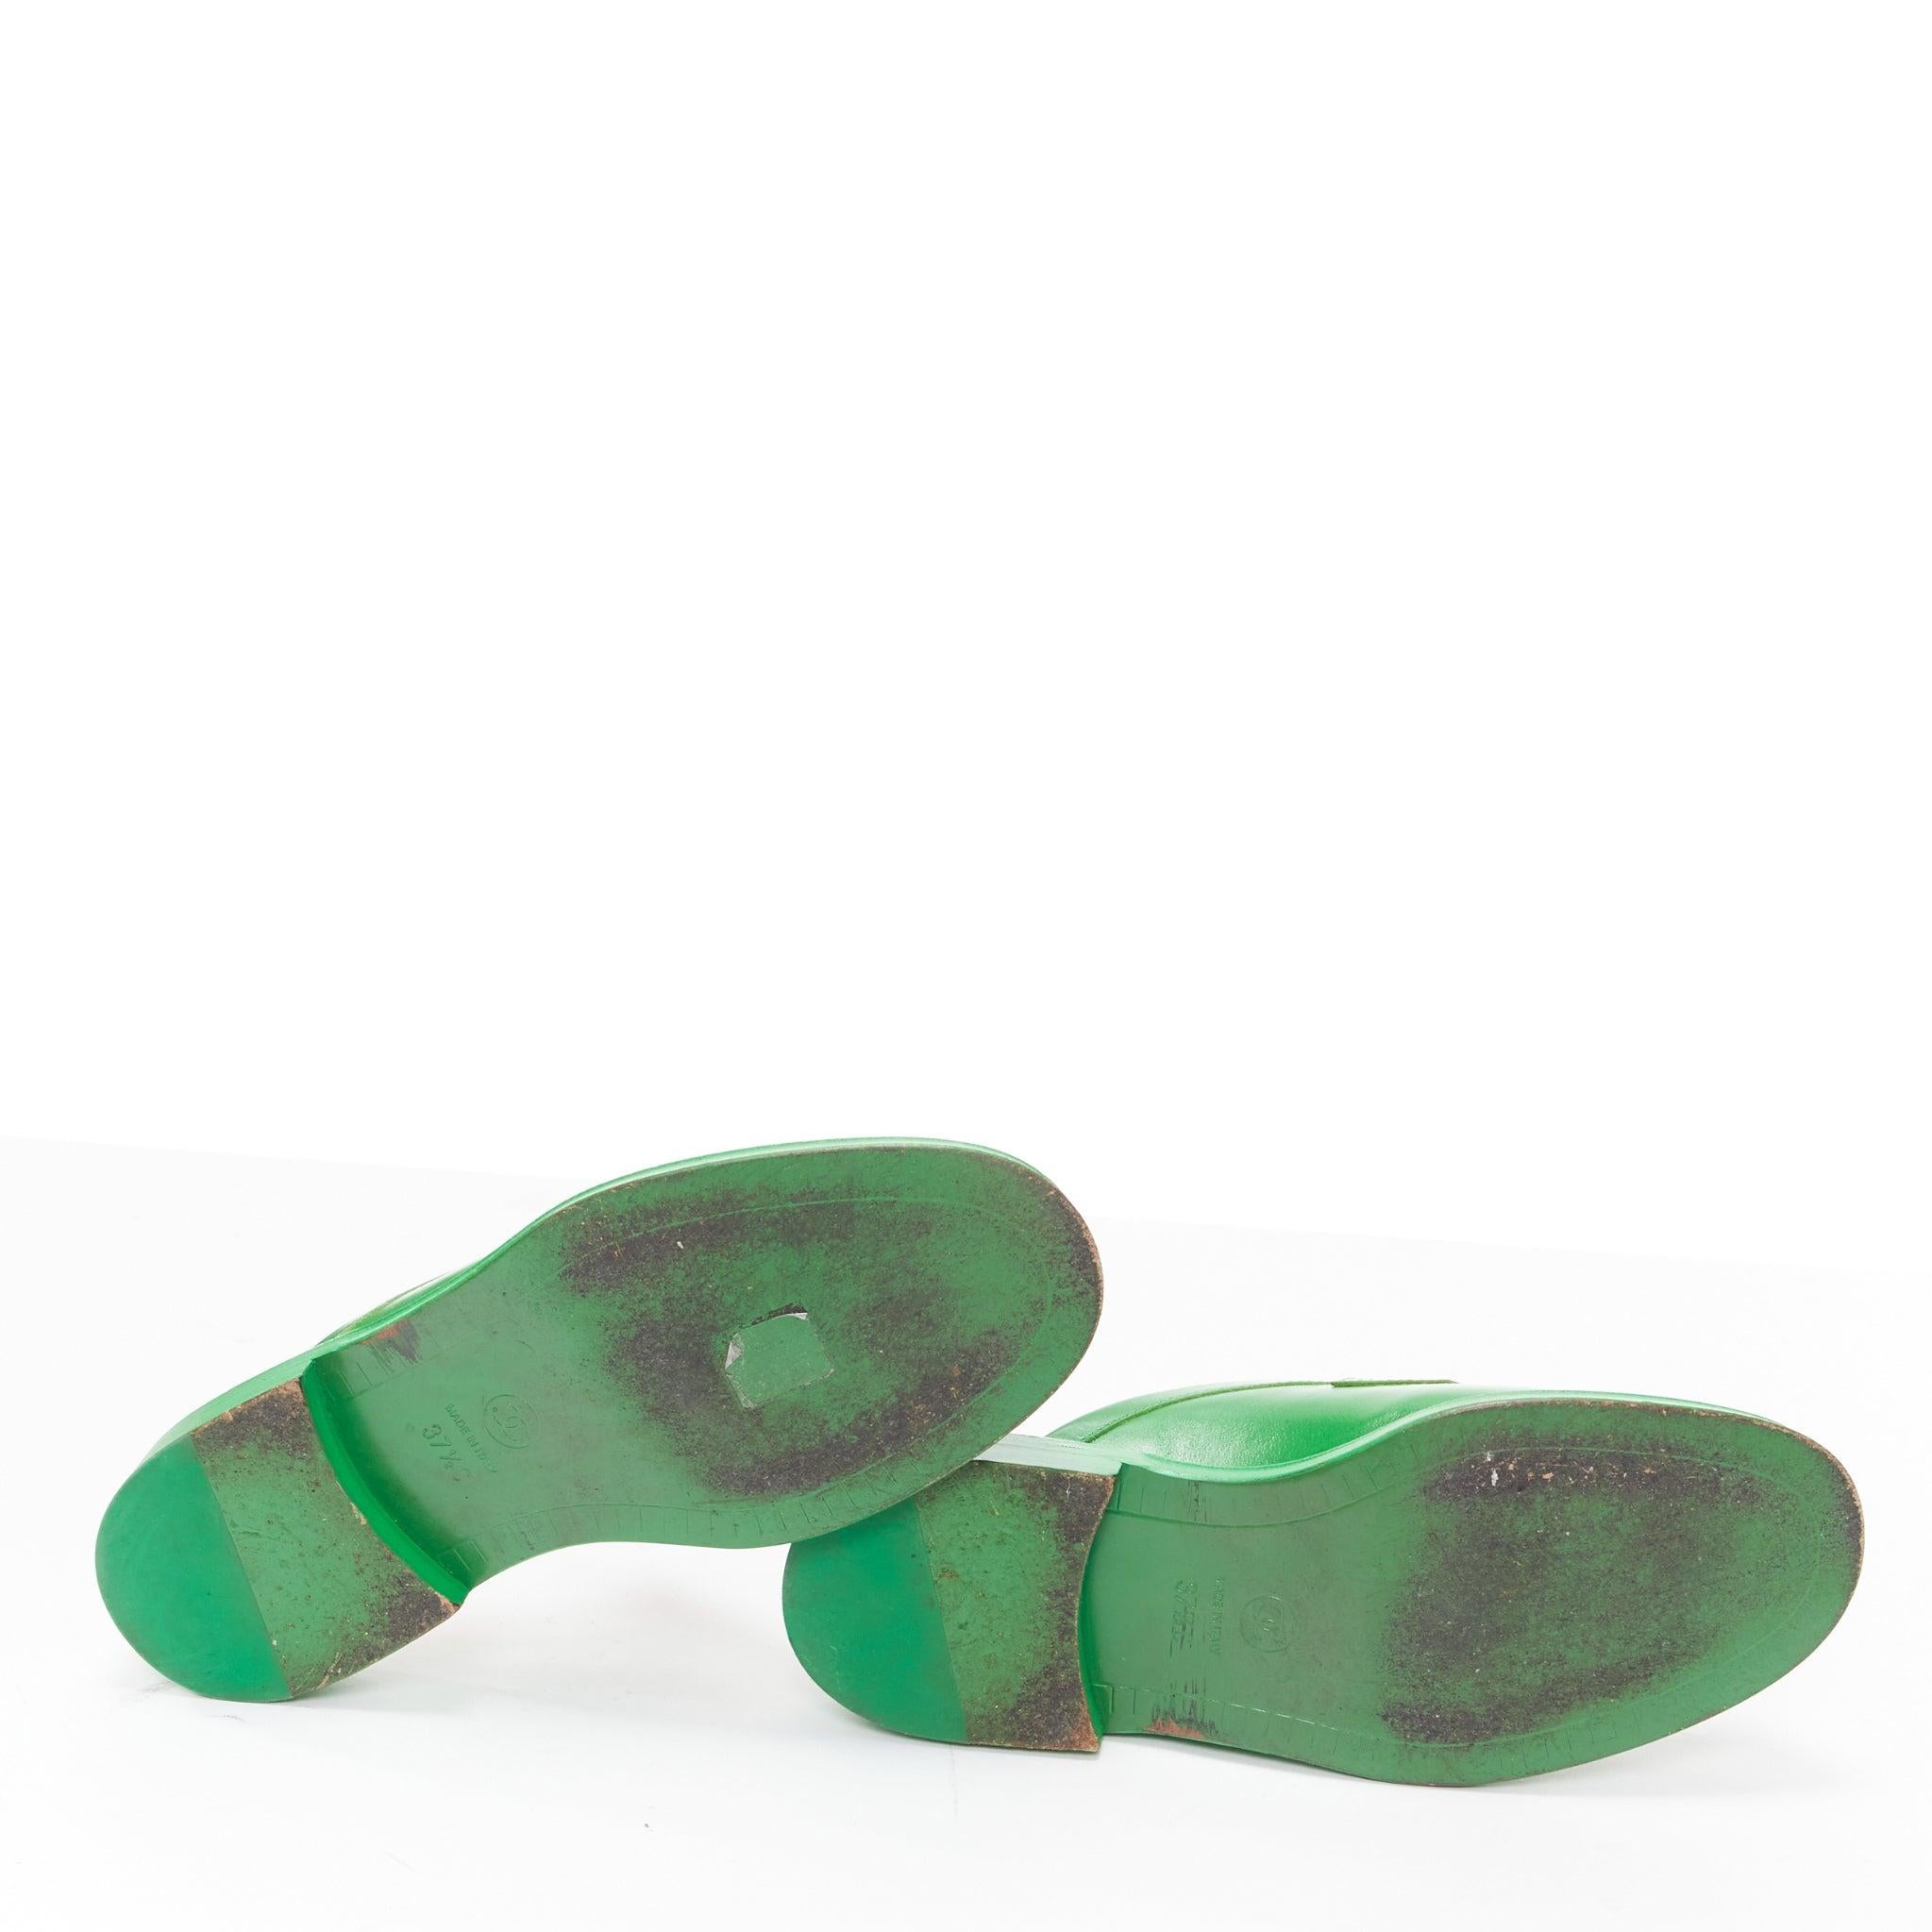 rare CHANEL PHARRELL green leather logo embellished slip on loafer flats EU37.5 For Sale 7